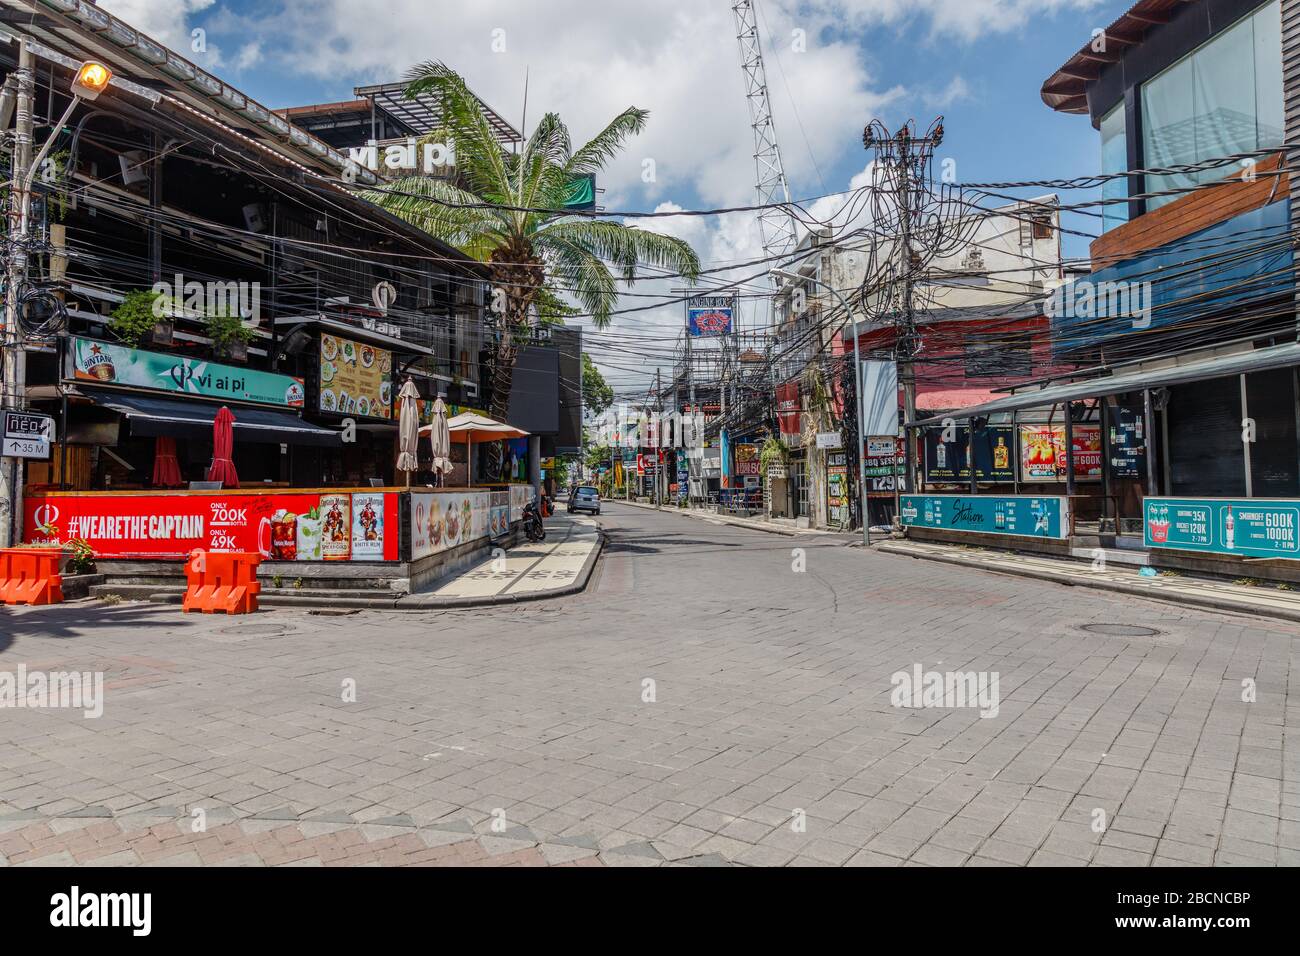 April, 05, 2020. Empty streets of Bali. No tourists due to COVID-19 virus. Jalan Legian, Kuta, Bali popular tourist area. Indonesia. Stock Photo